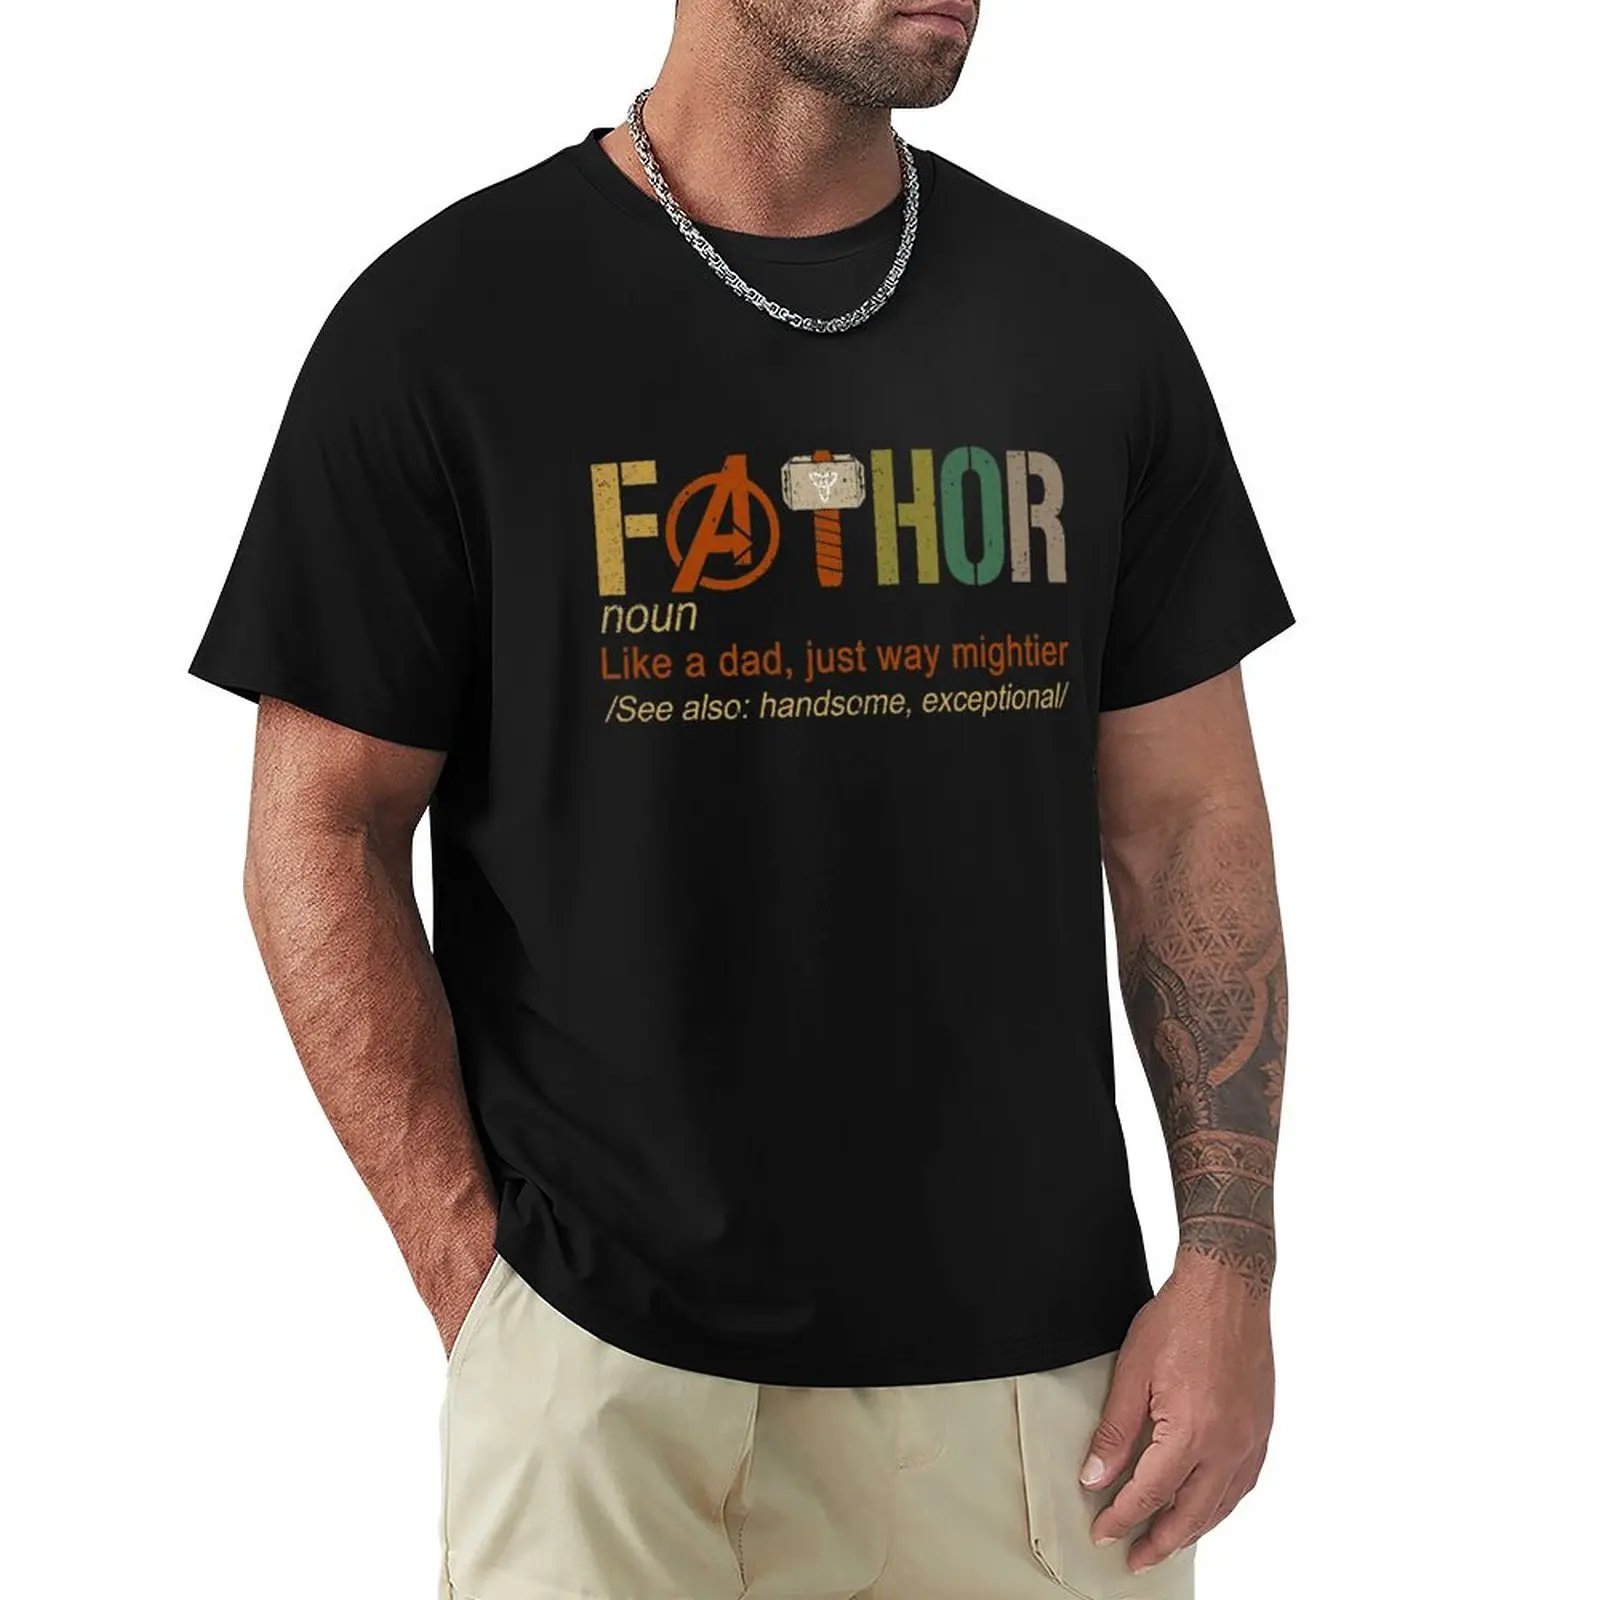 

Мужская футболка с надписью «Fa-Thor»